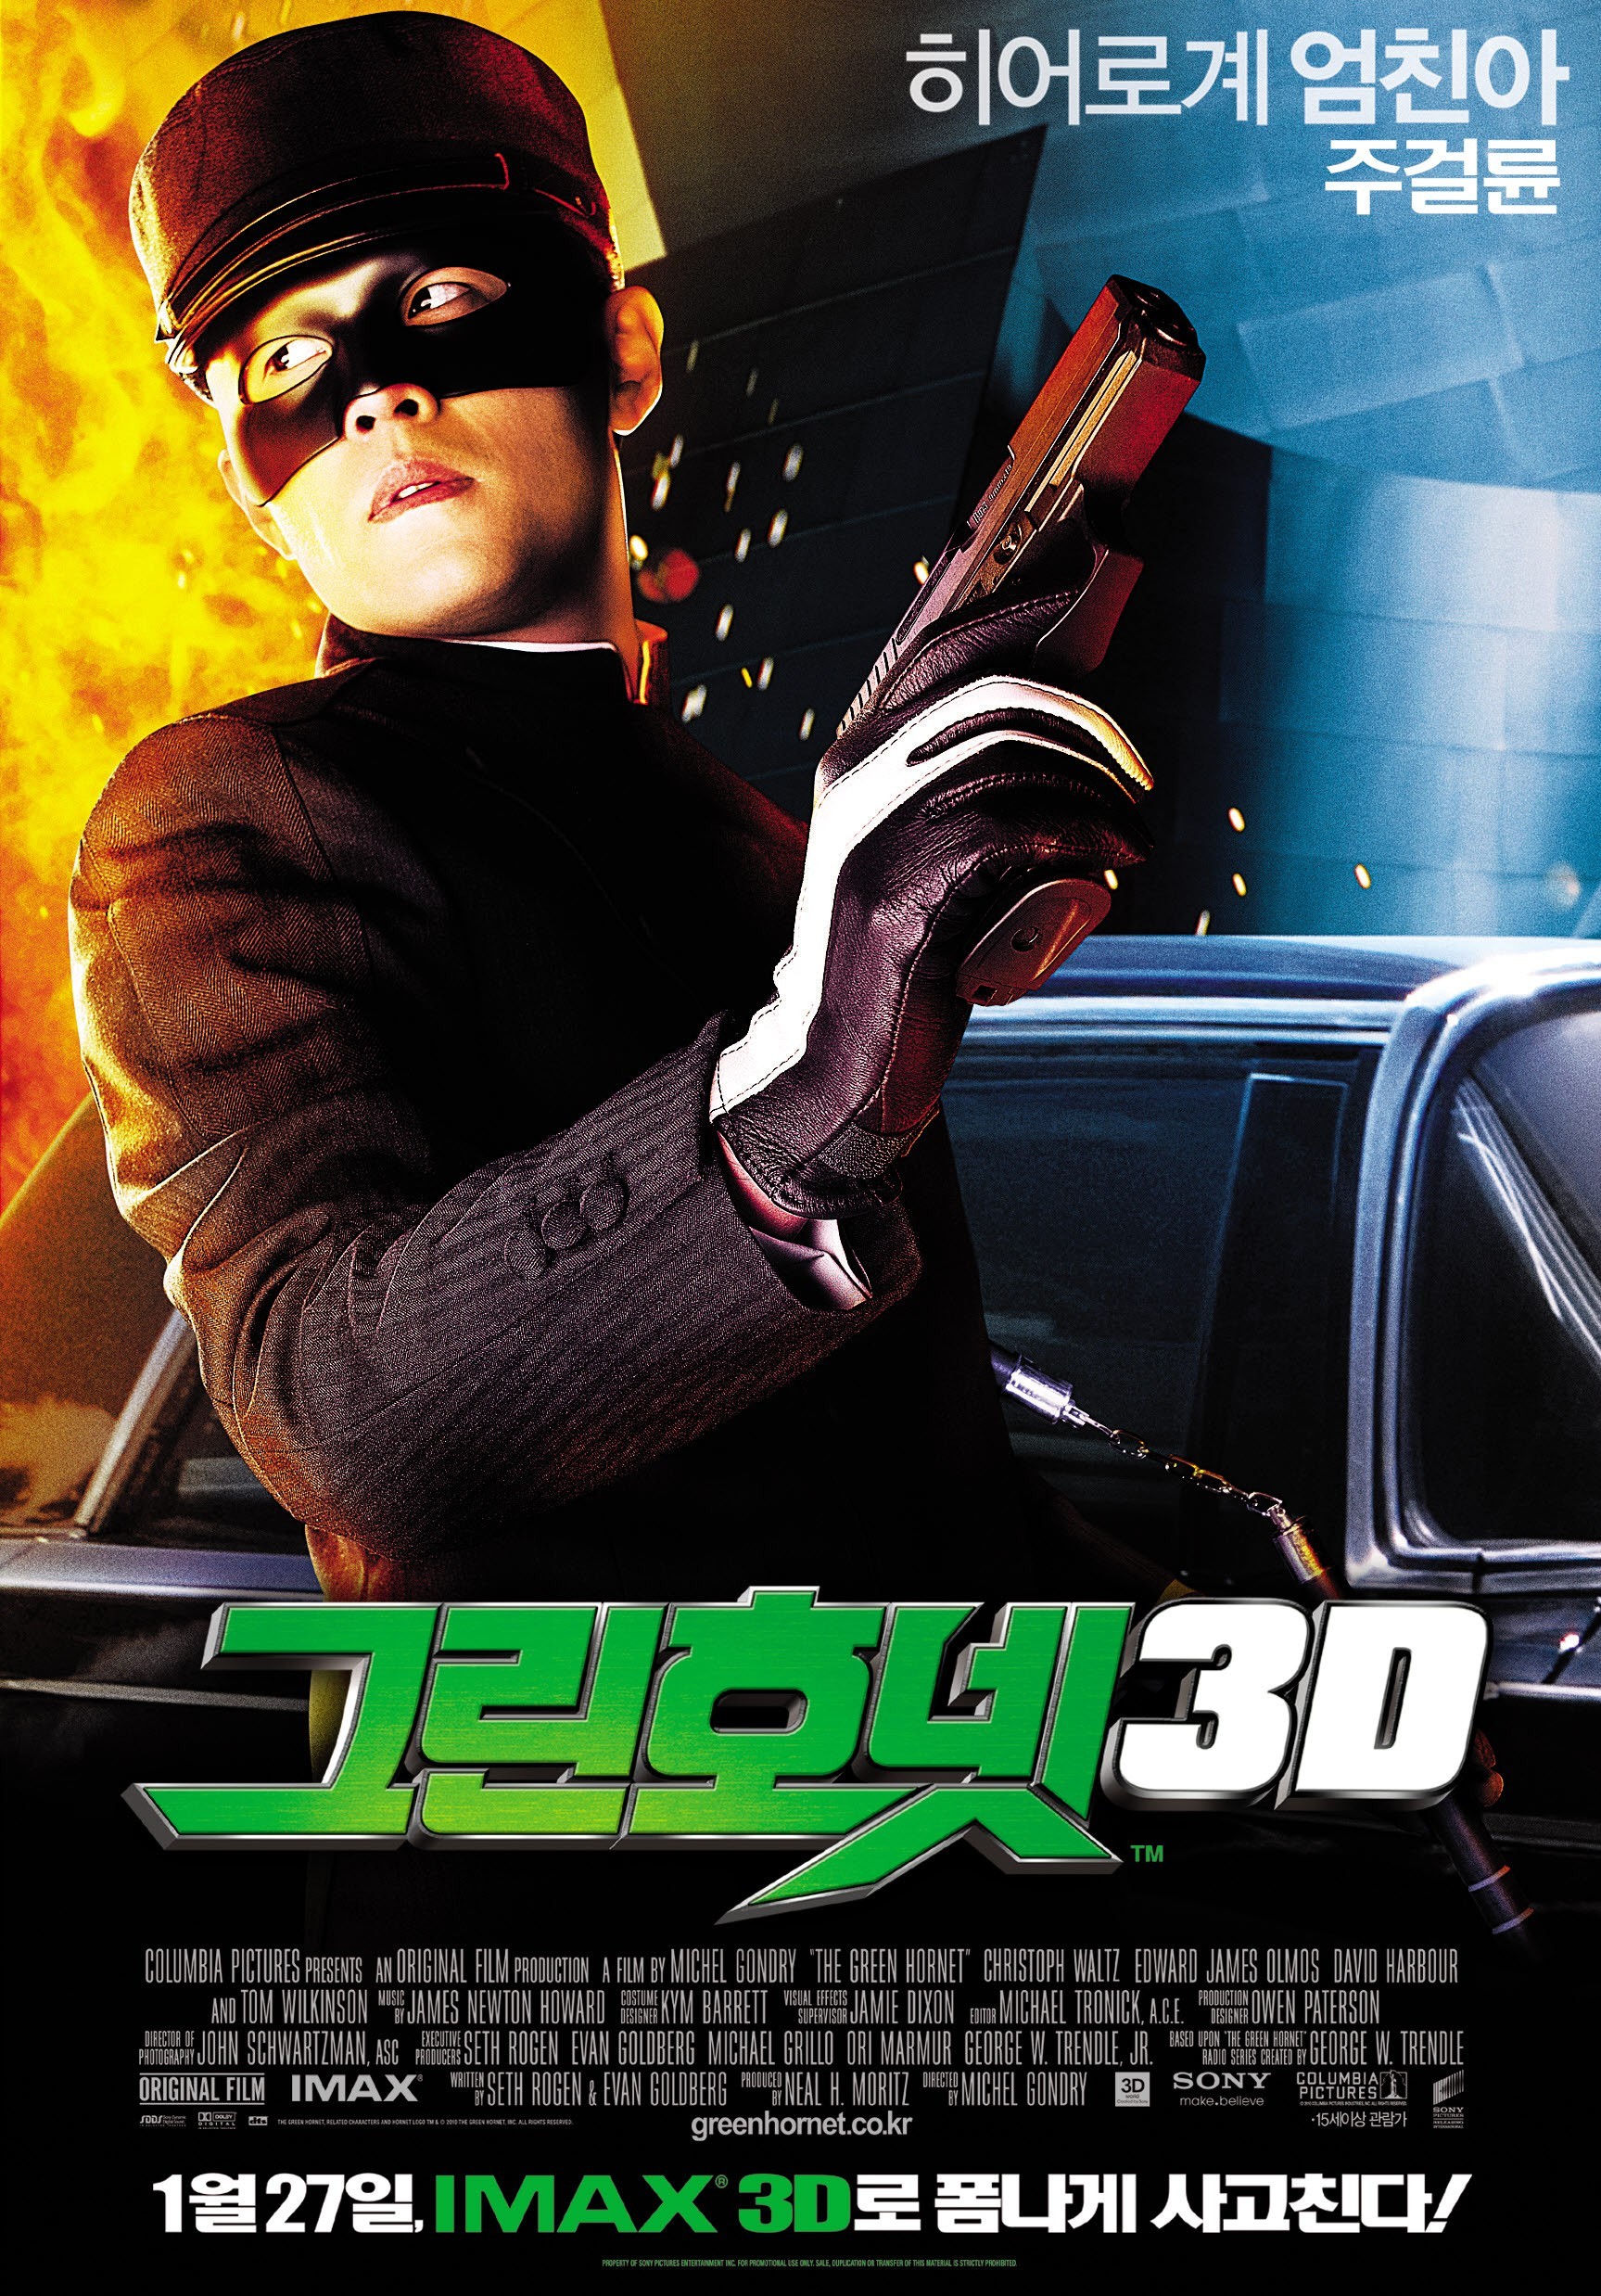 Mega Sized Movie Poster Image for The Green Hornet (#8 of 10)